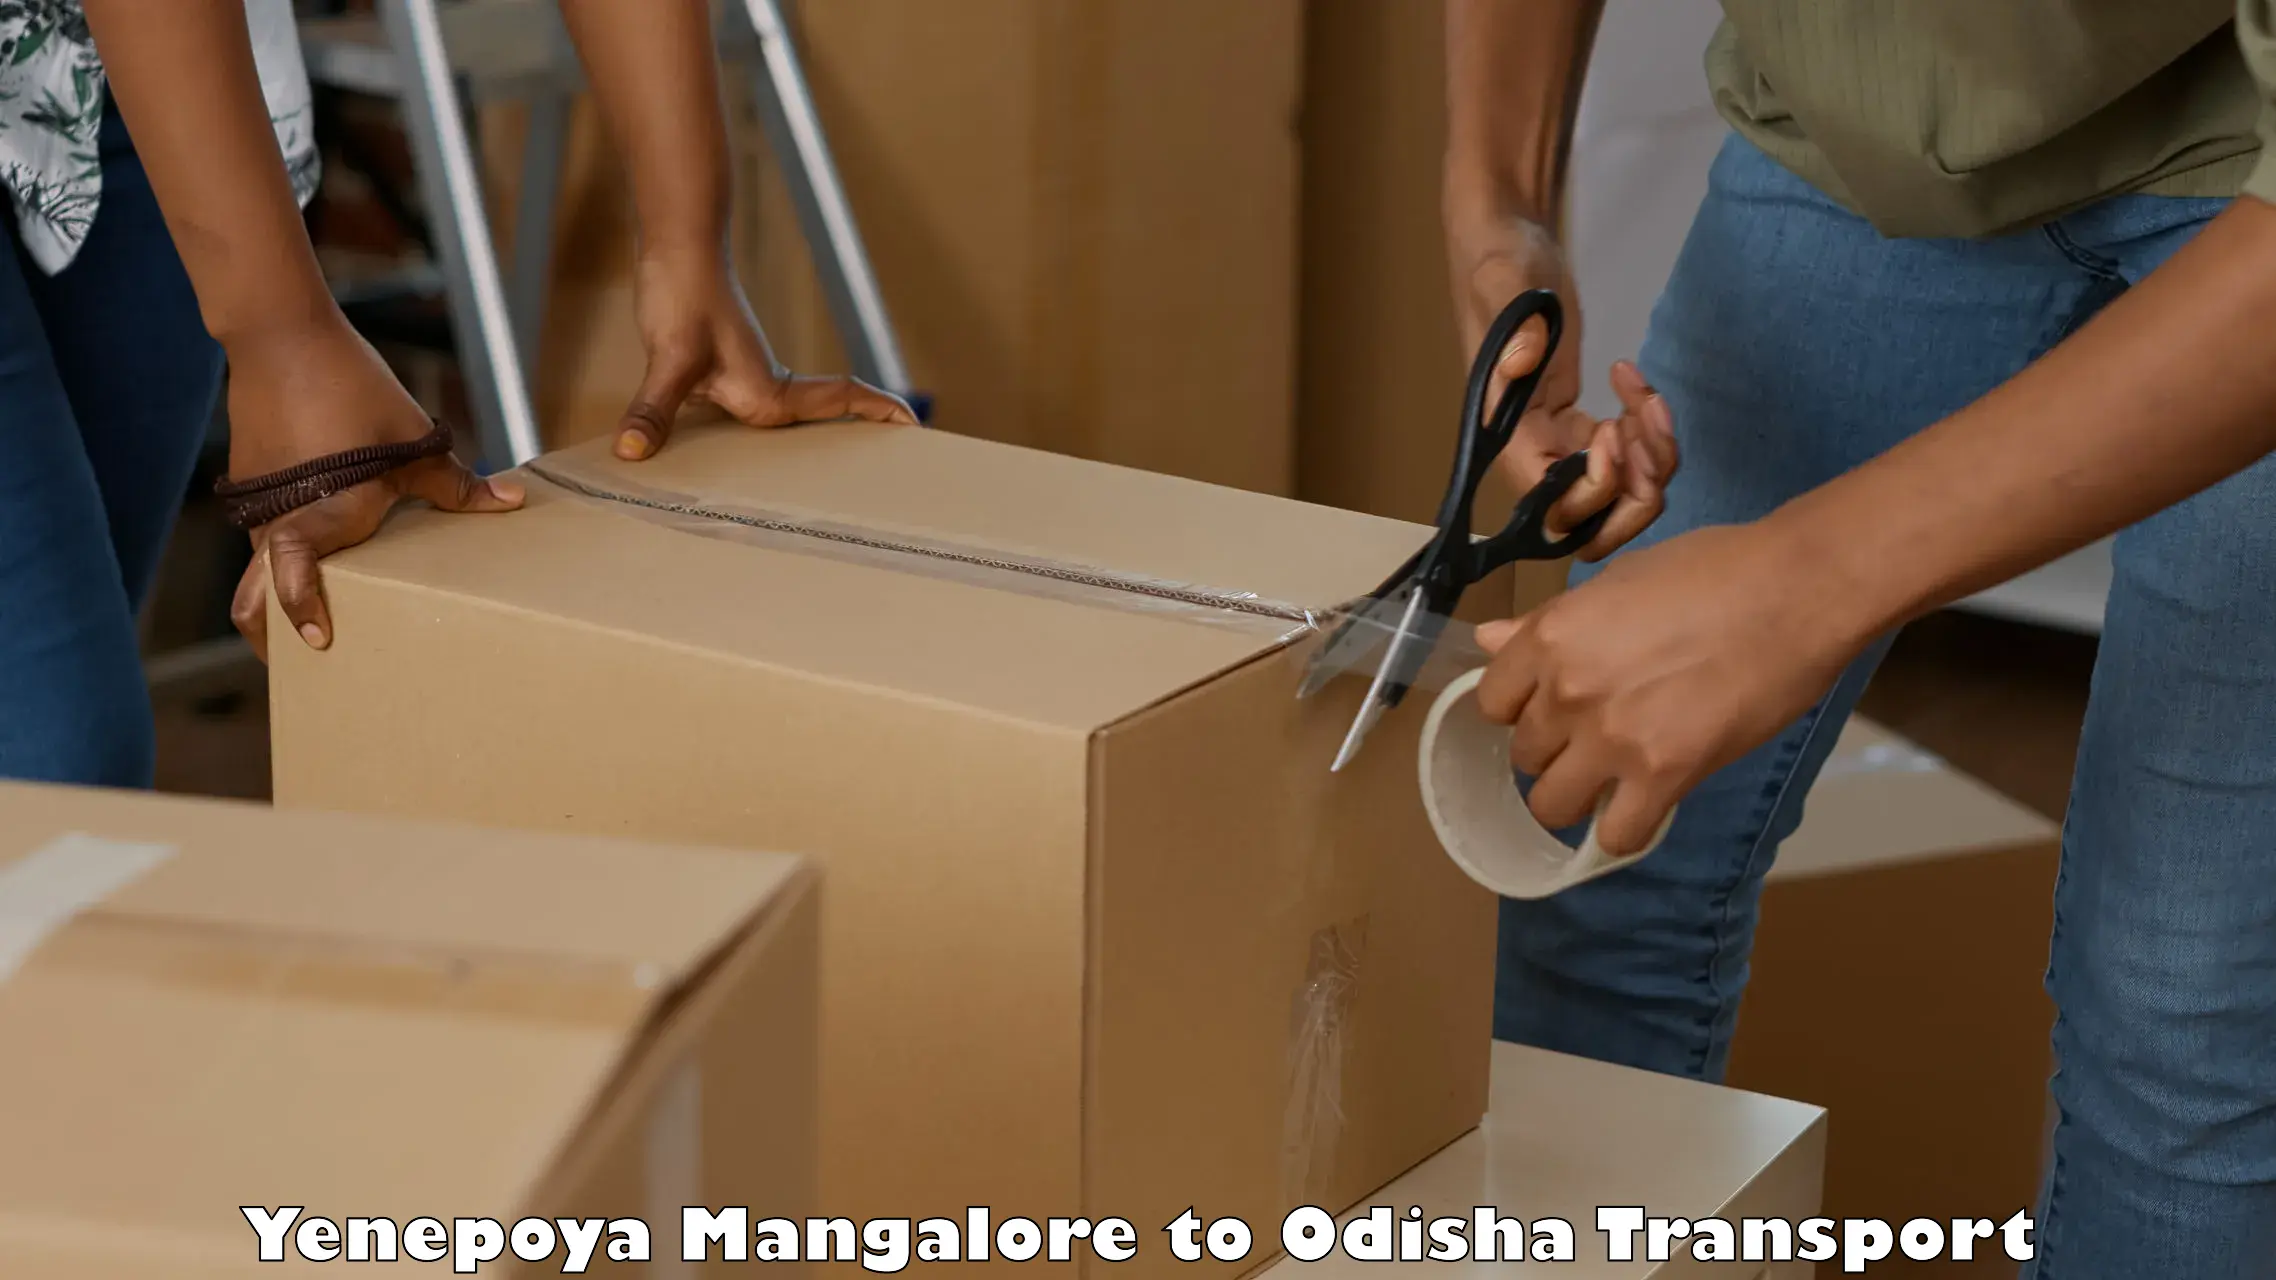 Truck transport companies in India Yenepoya Mangalore to Odisha